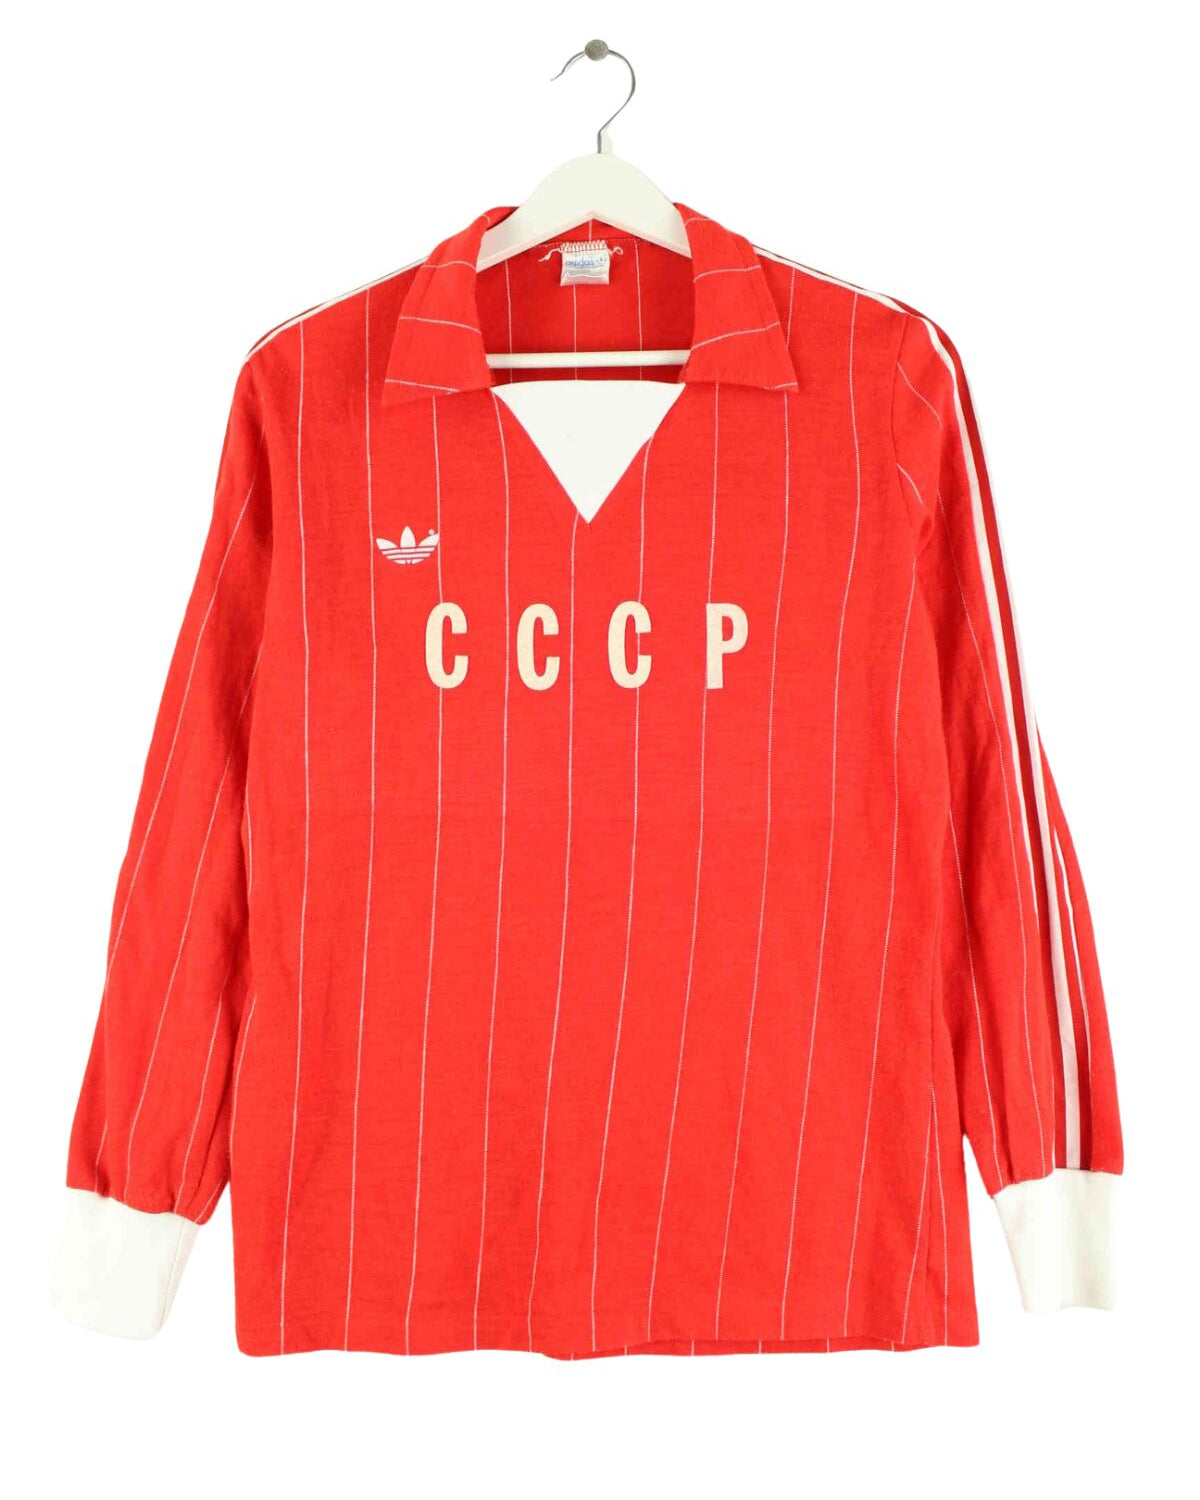 Adidas 70s Vintage Sowjet CCCP Print Trikot Rot XS (front image)